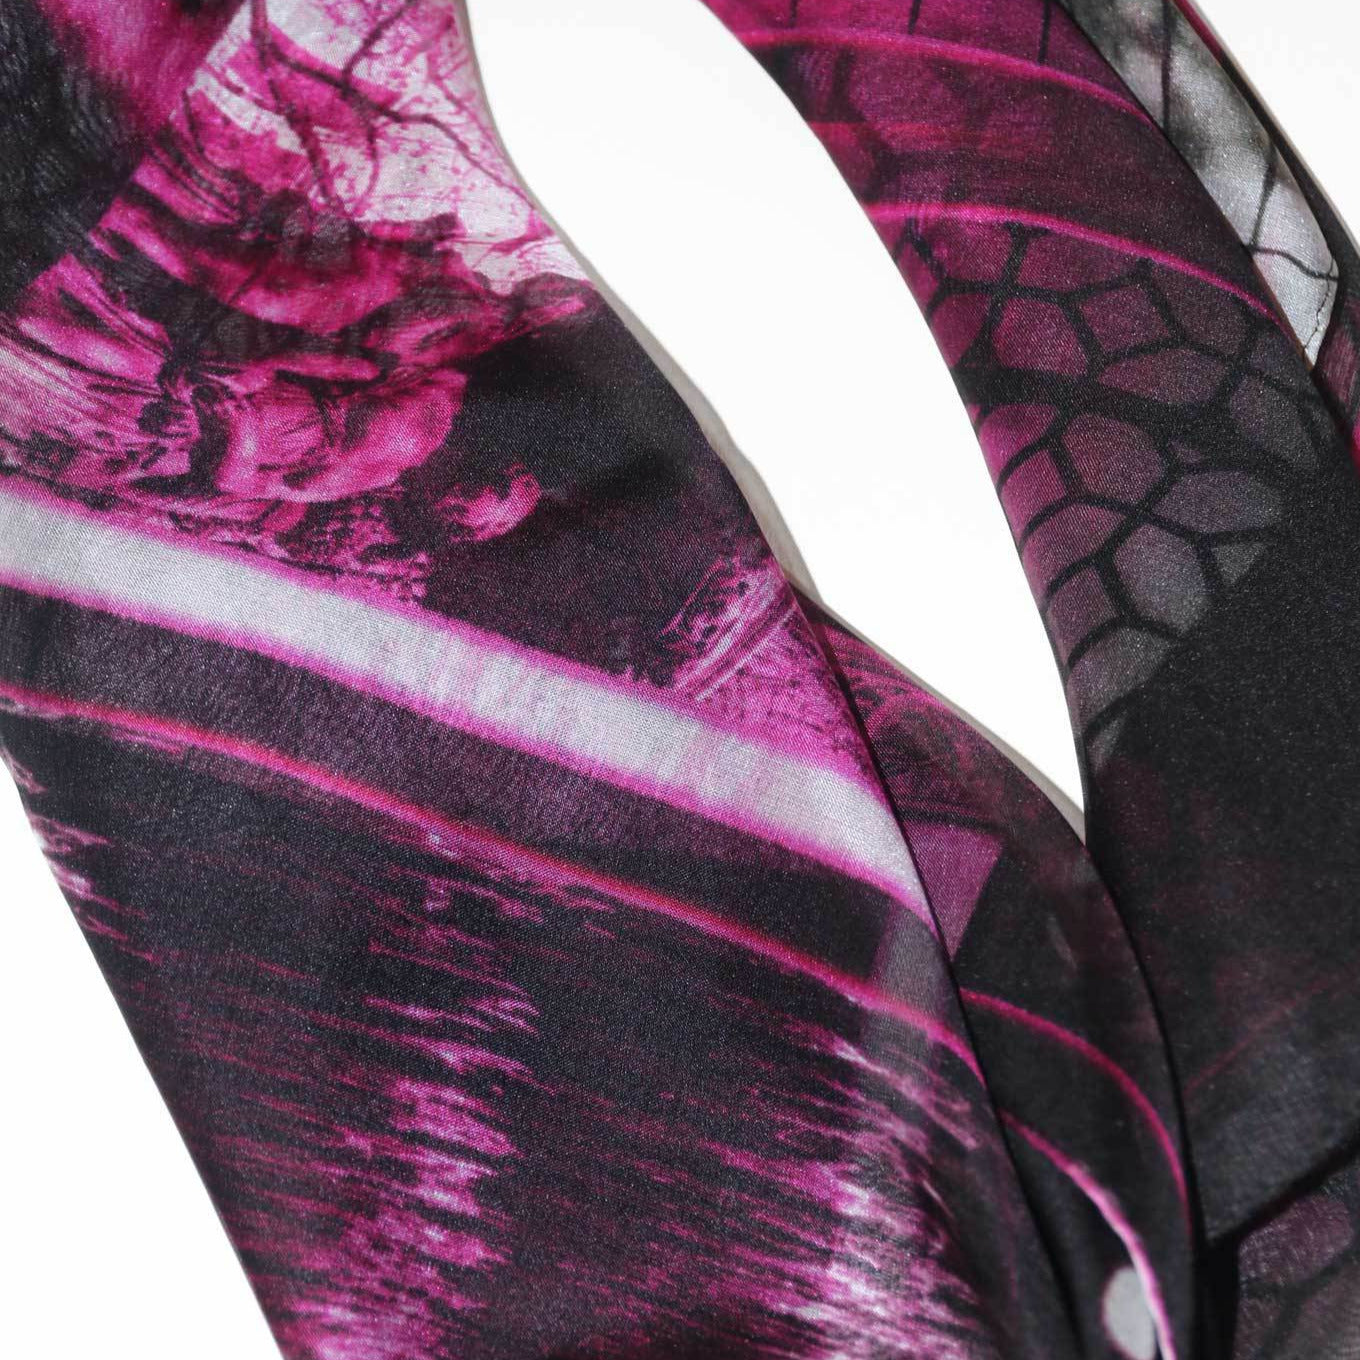 Chic black silk chiffon fashion scarf paris impression from a friend of mine online